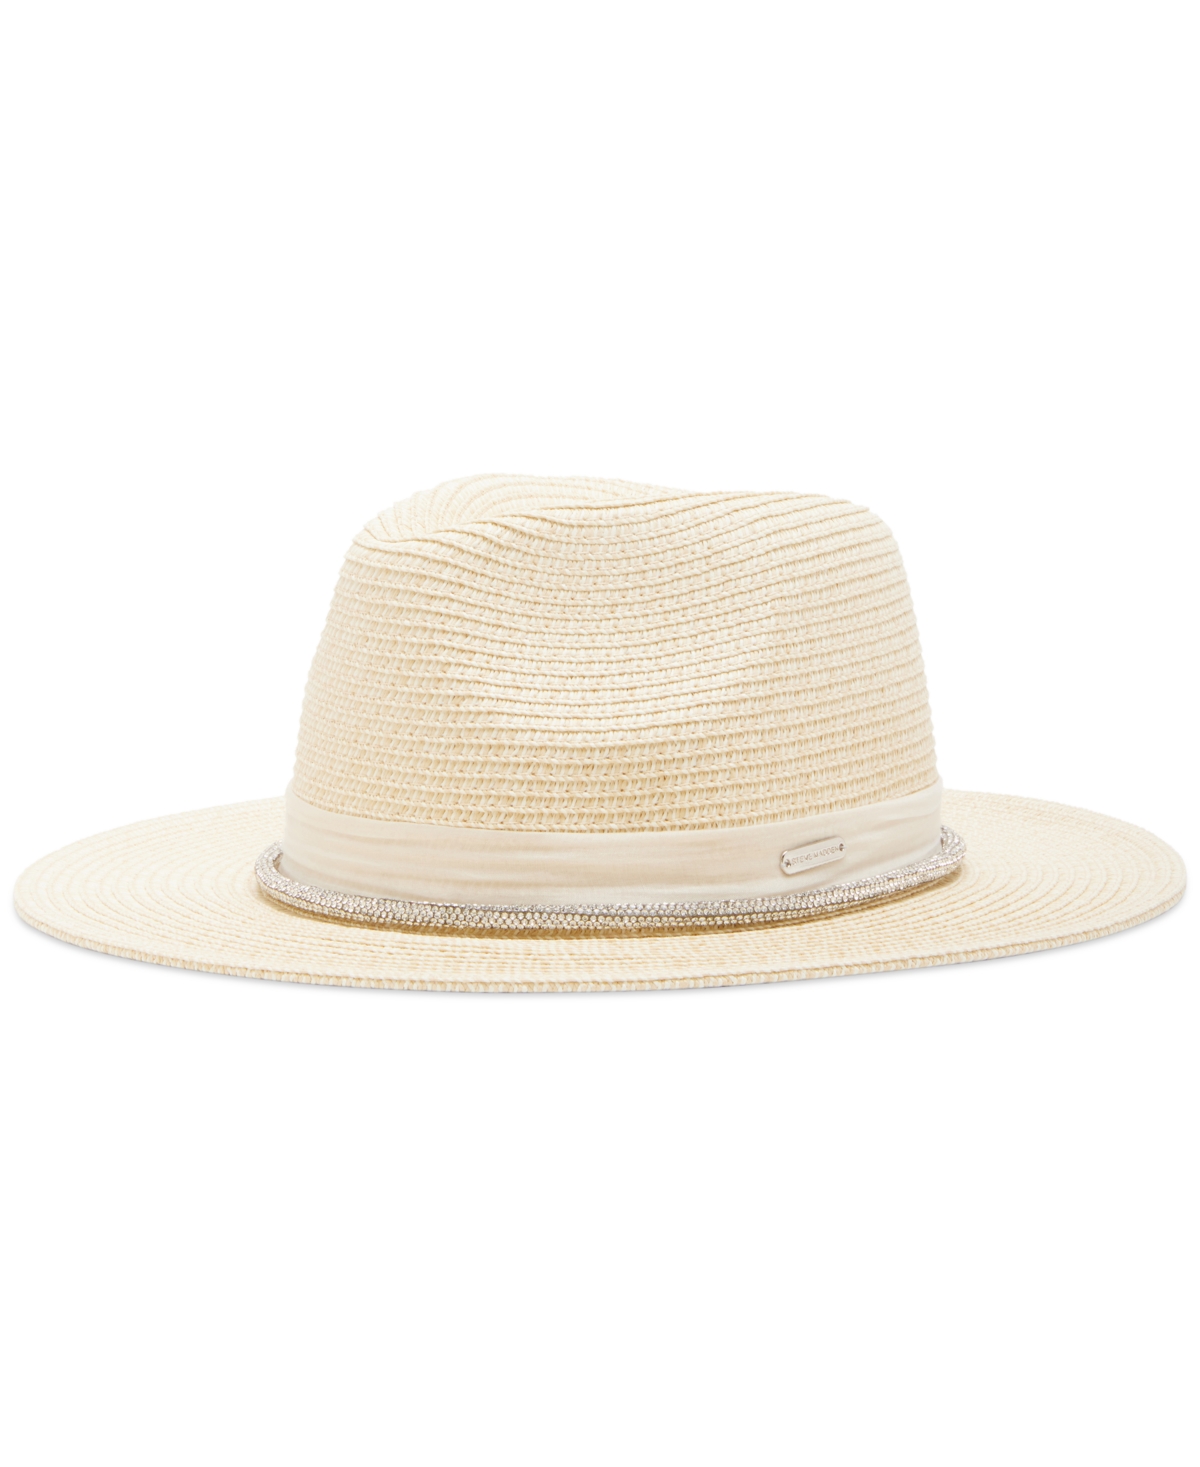 Women's Embellished Panama Hat - Natural